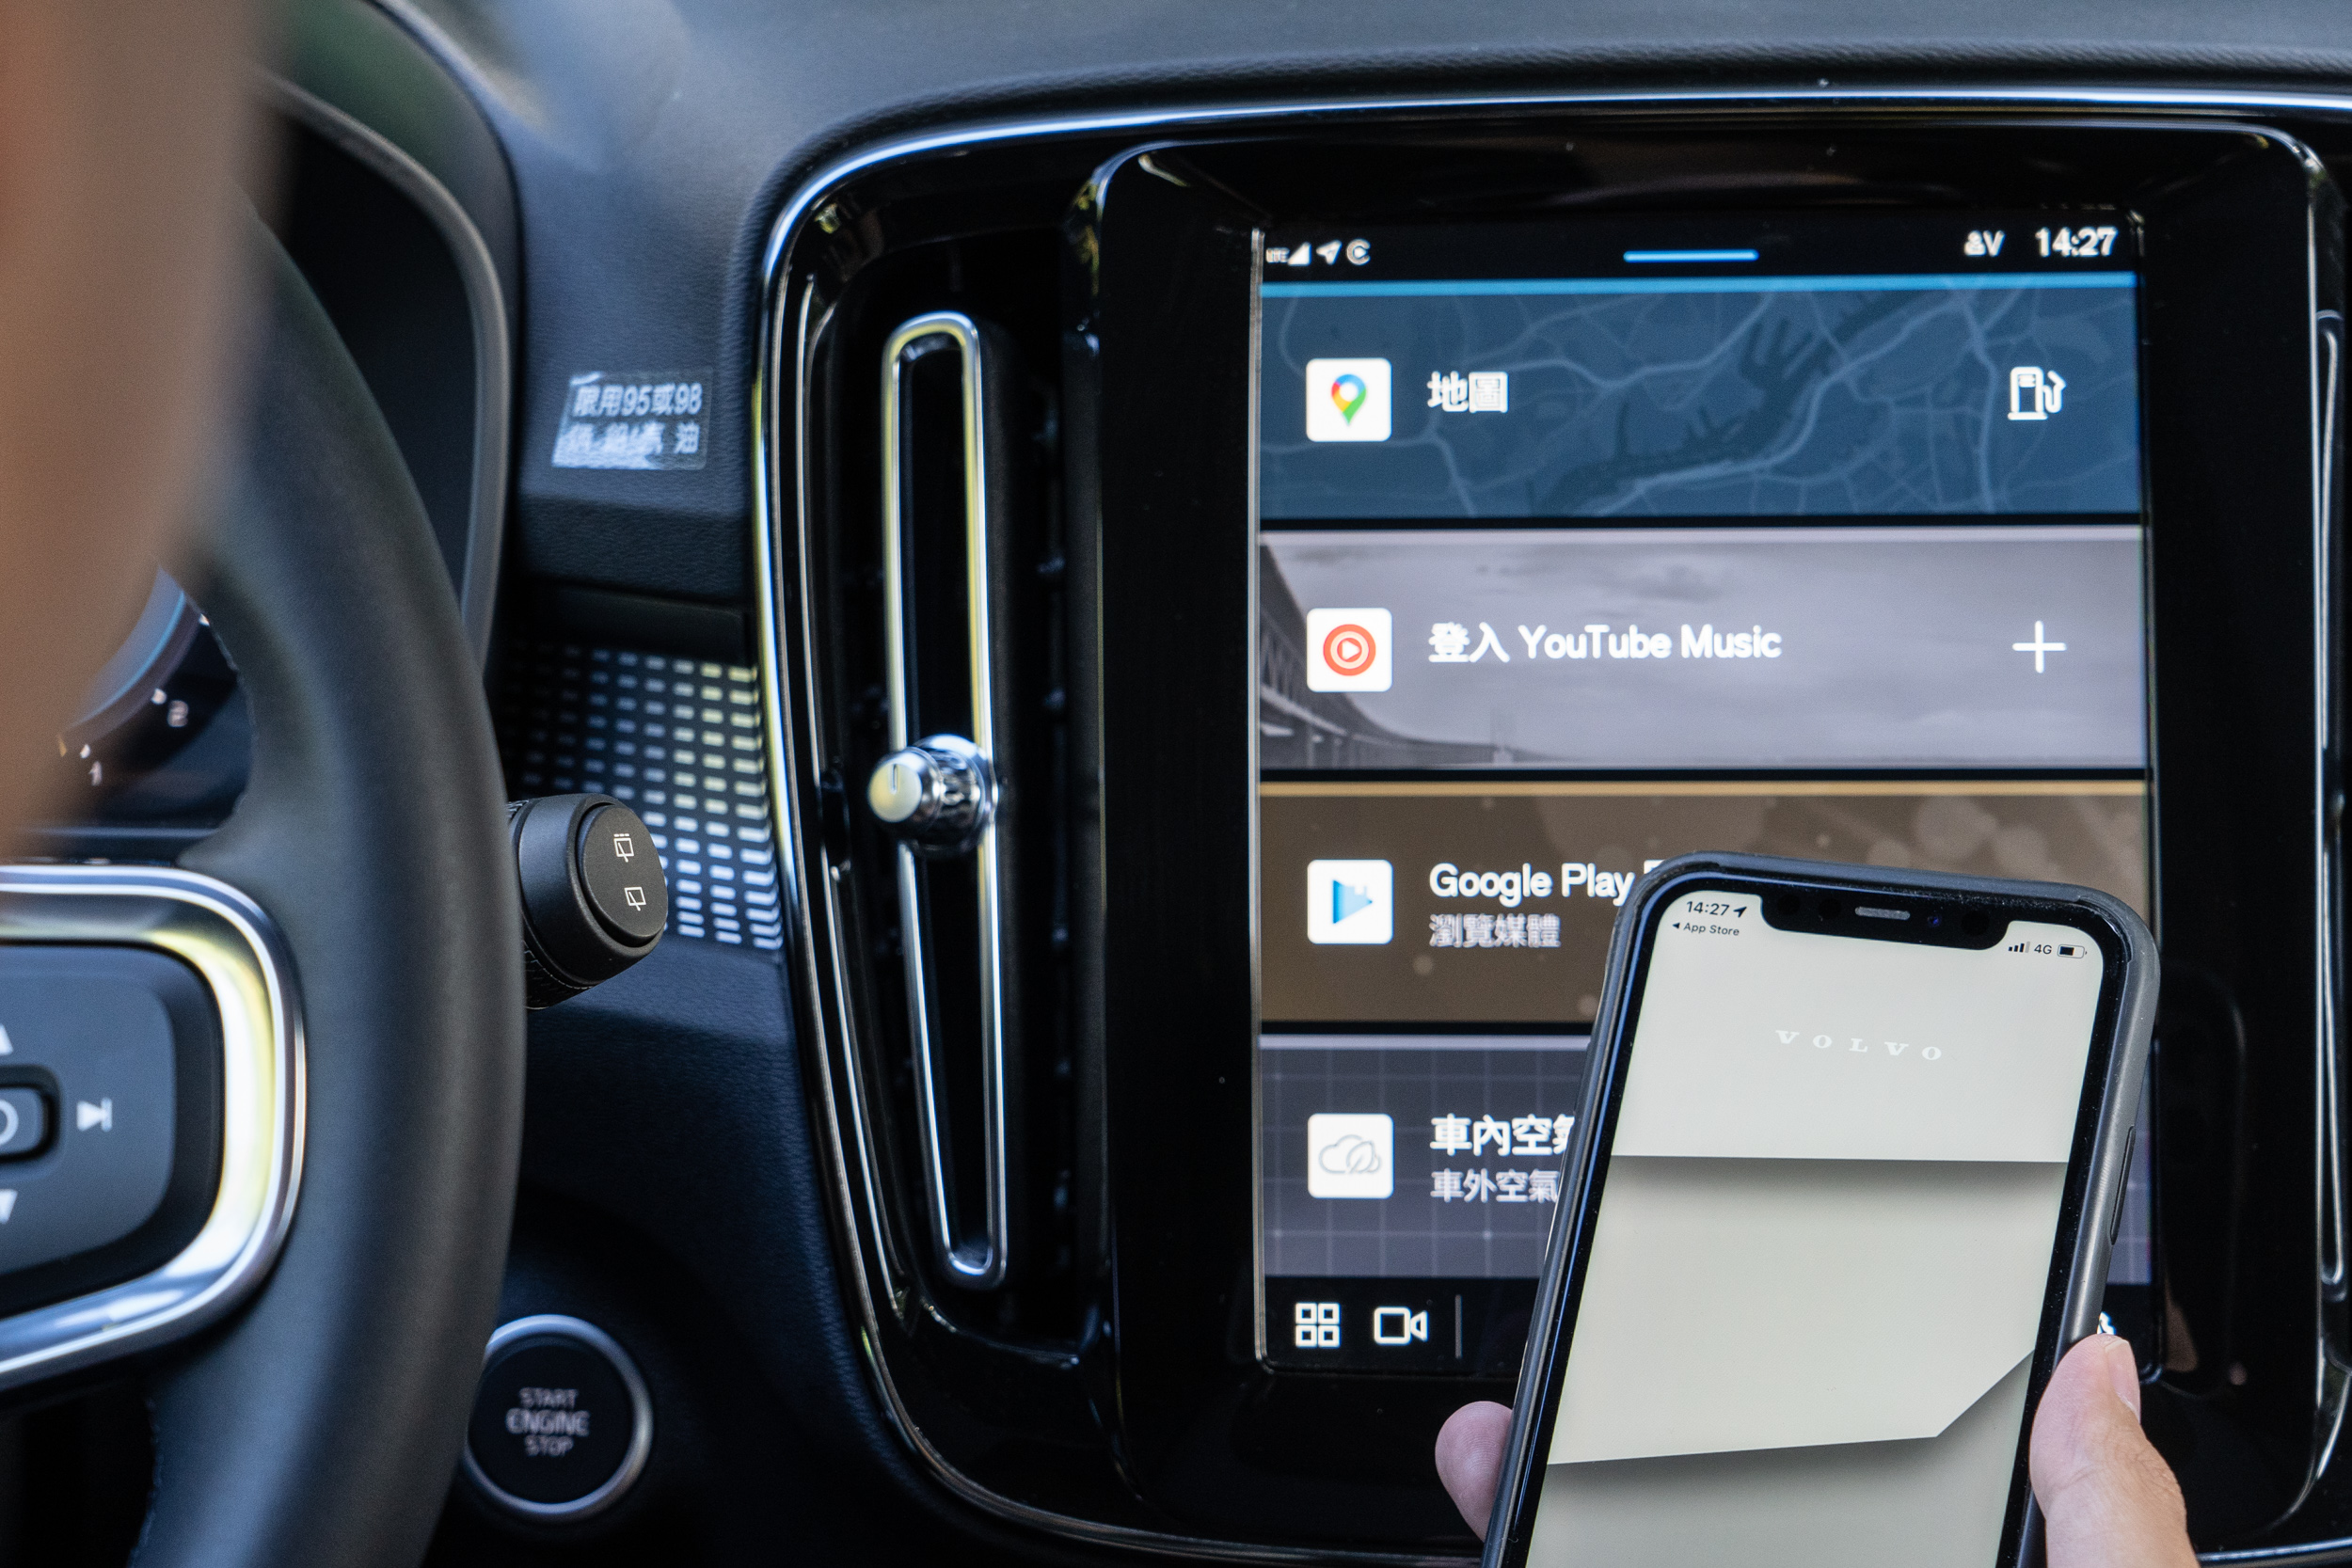 Volvo On Call 可以讓車主於智慧型手機上查看如車輛狀況等基本狀態，也可遠端操作車輛。